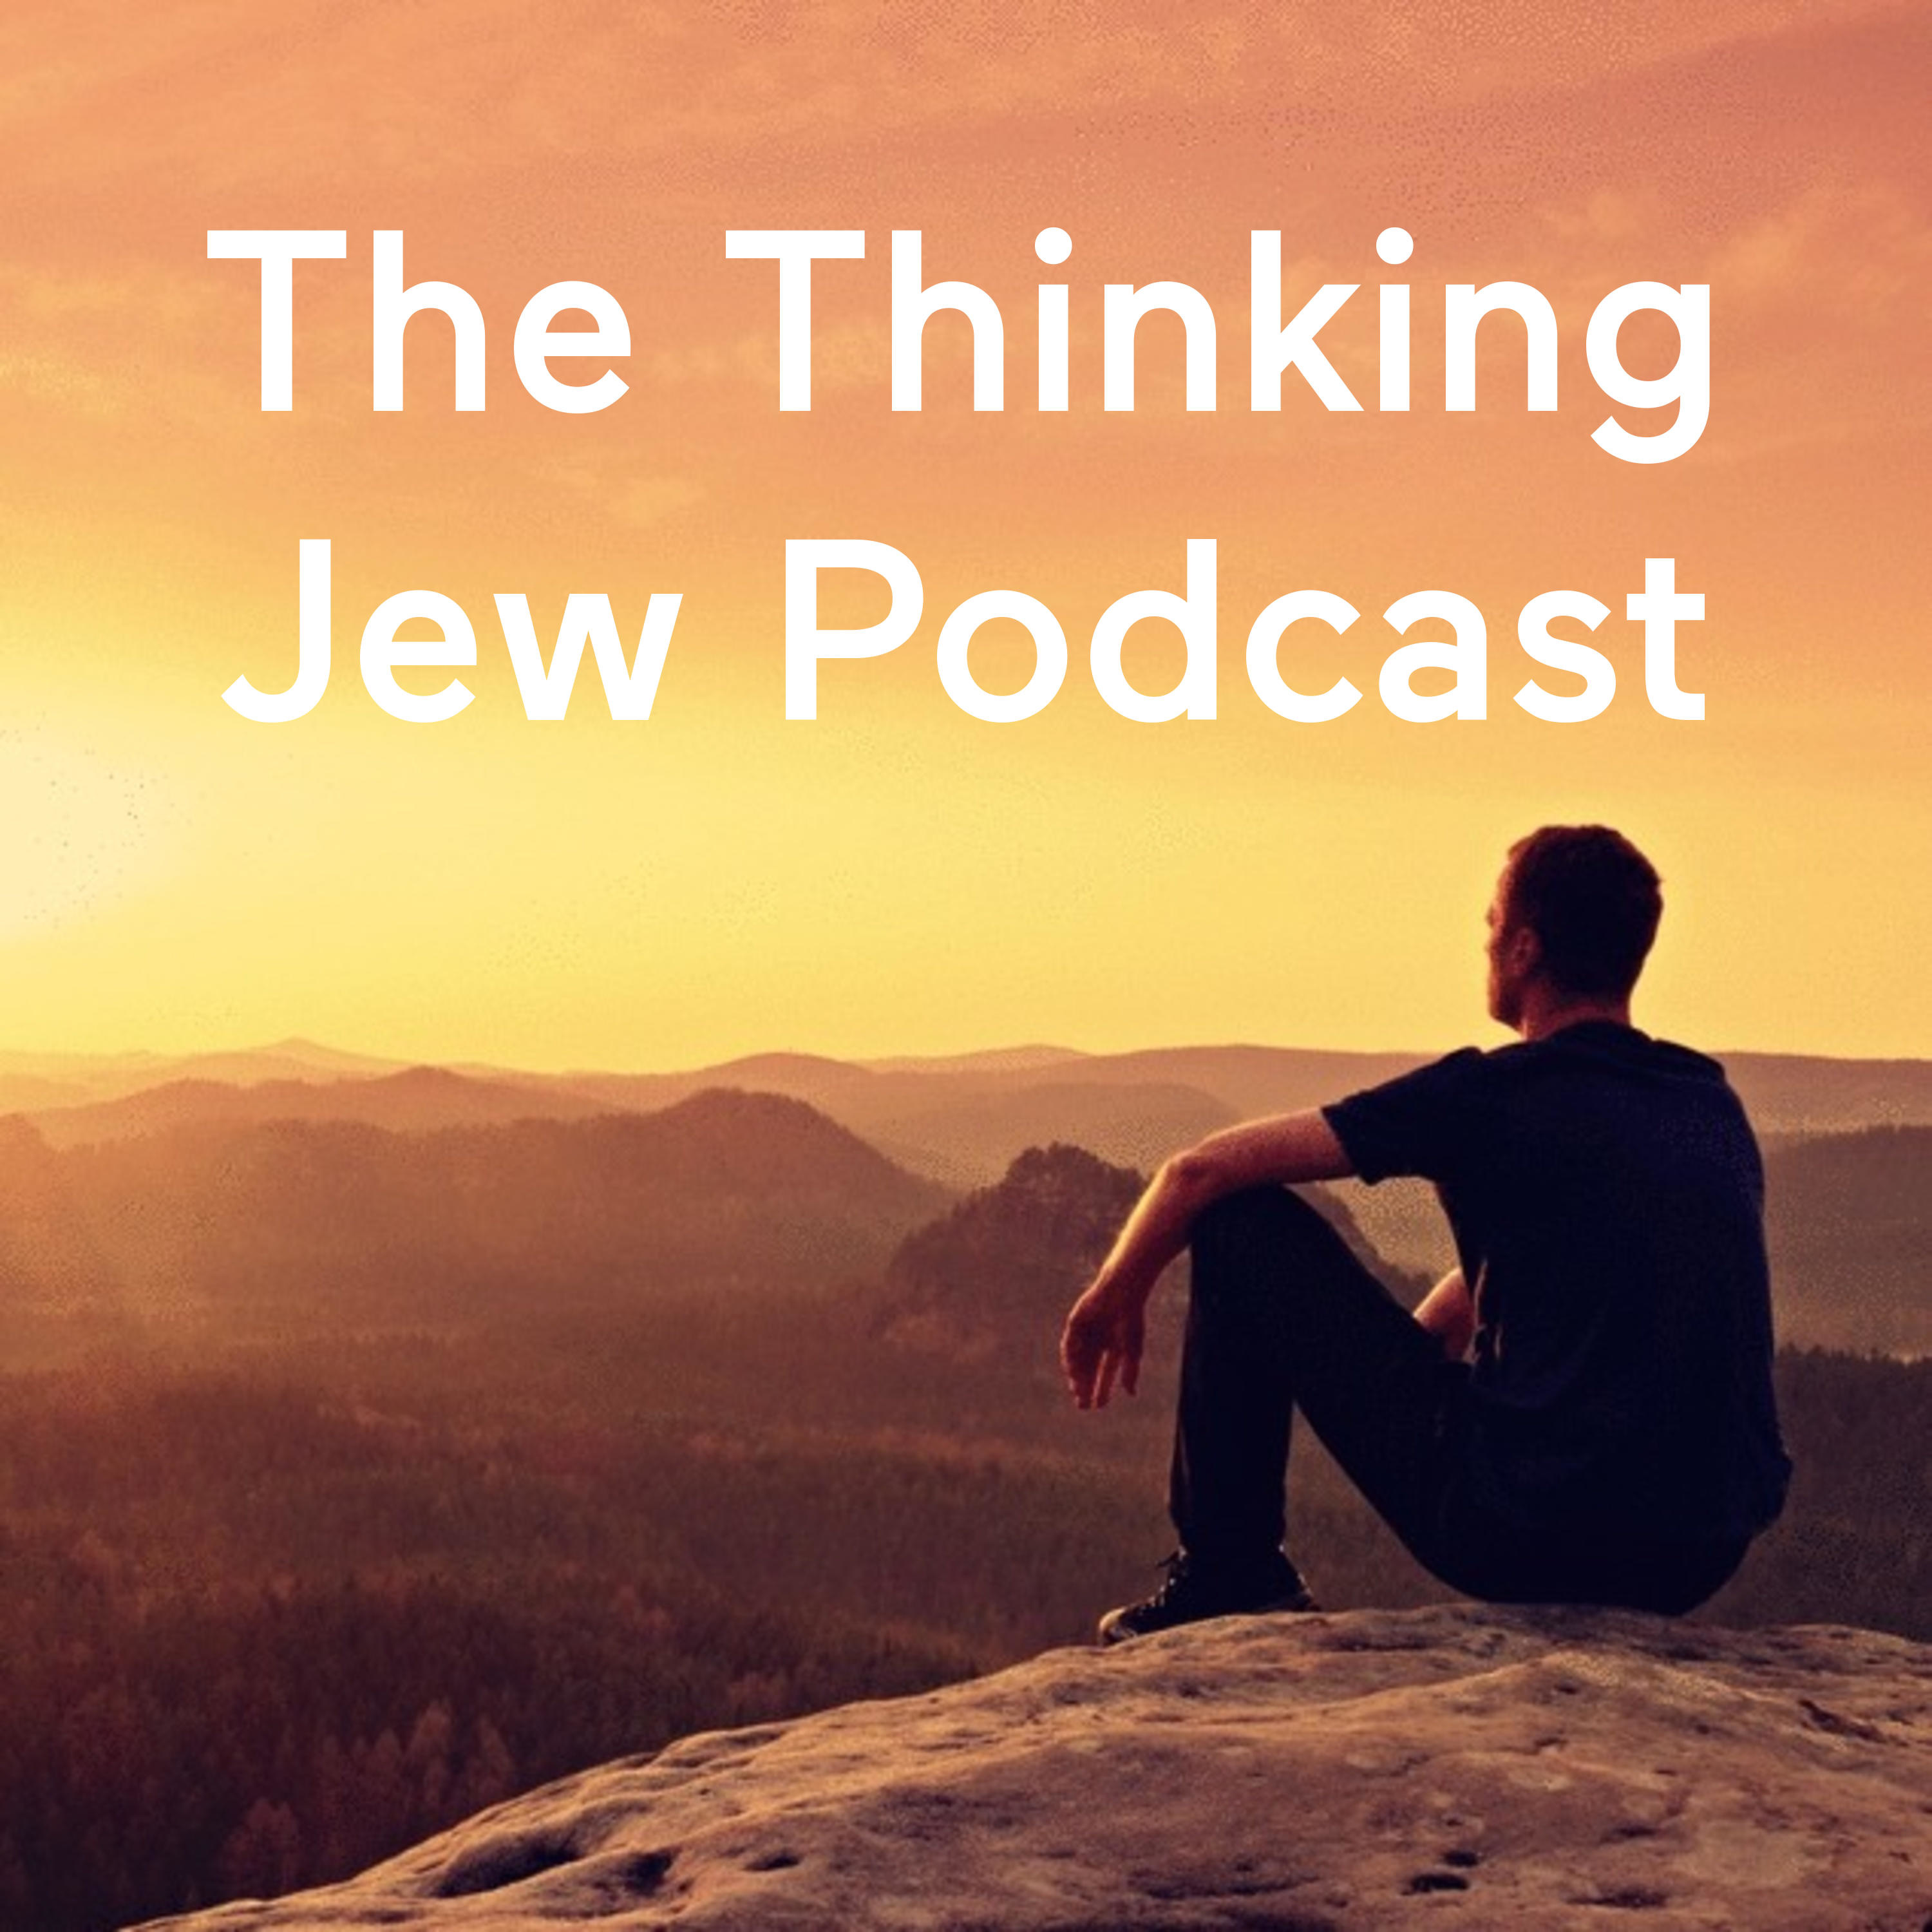 The Thinking Jew